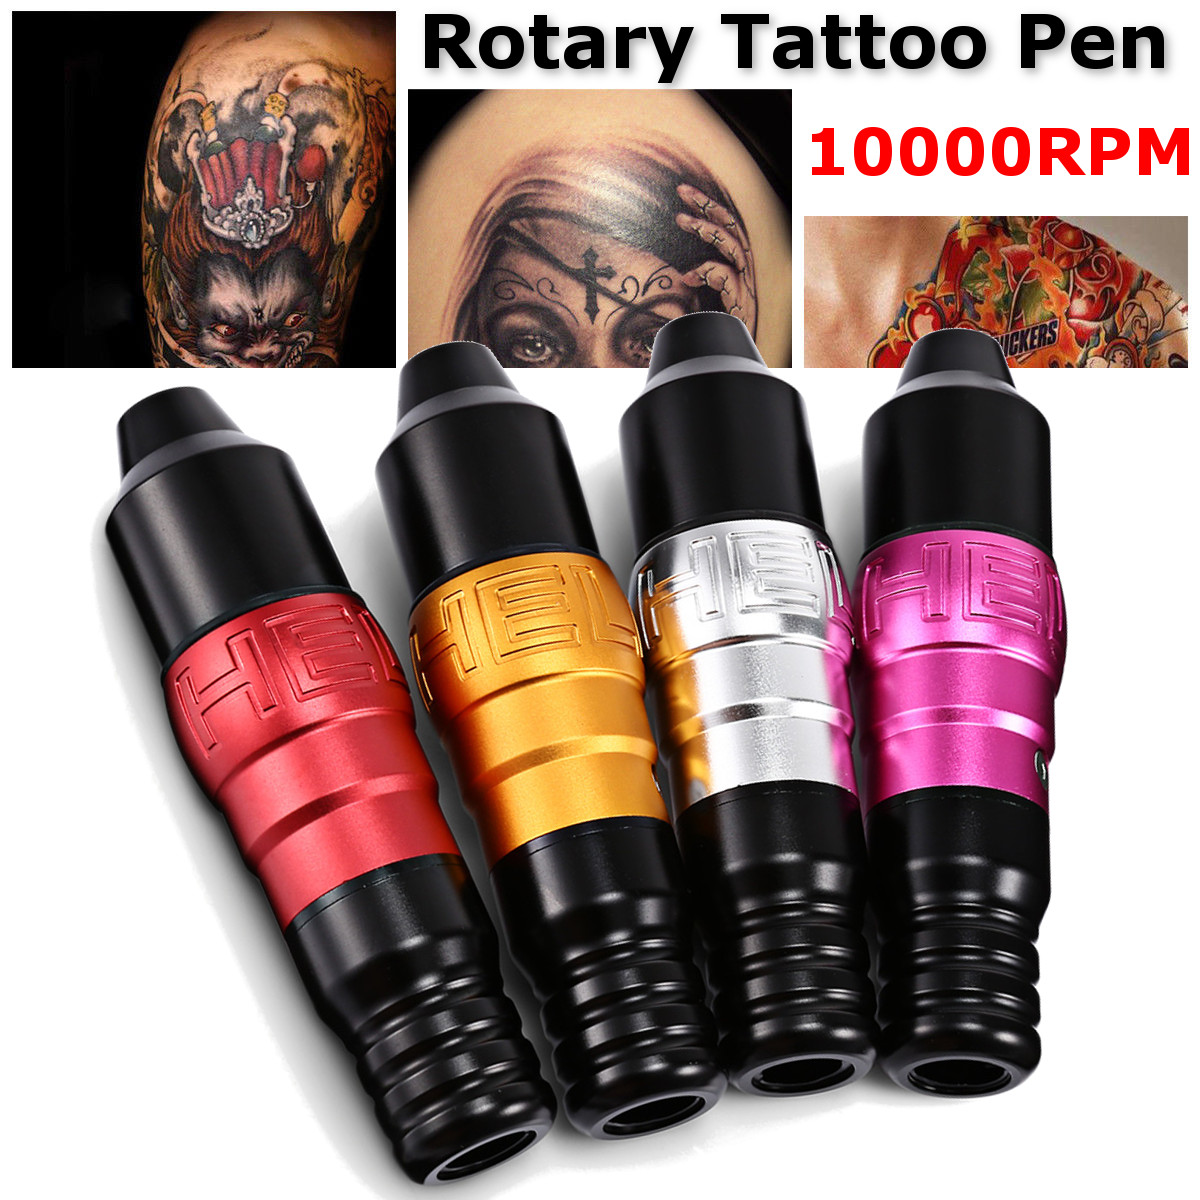 10000RPM-Rotary-Tattoo-Pen-Mabuchi-Motor-Needle-Cartridge-Direct-Drive-Machine-1357434